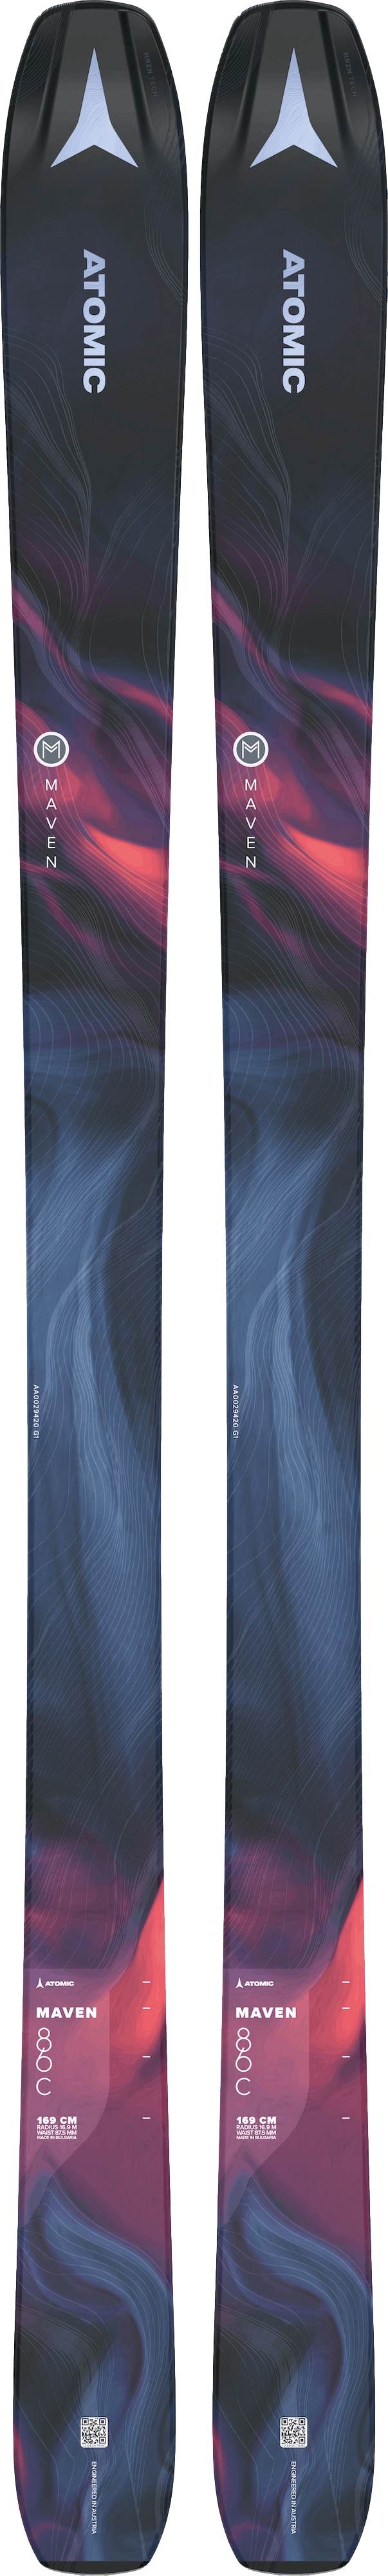 Atomic Maven 86 C Skis · Women's · 2023 · 161 cm